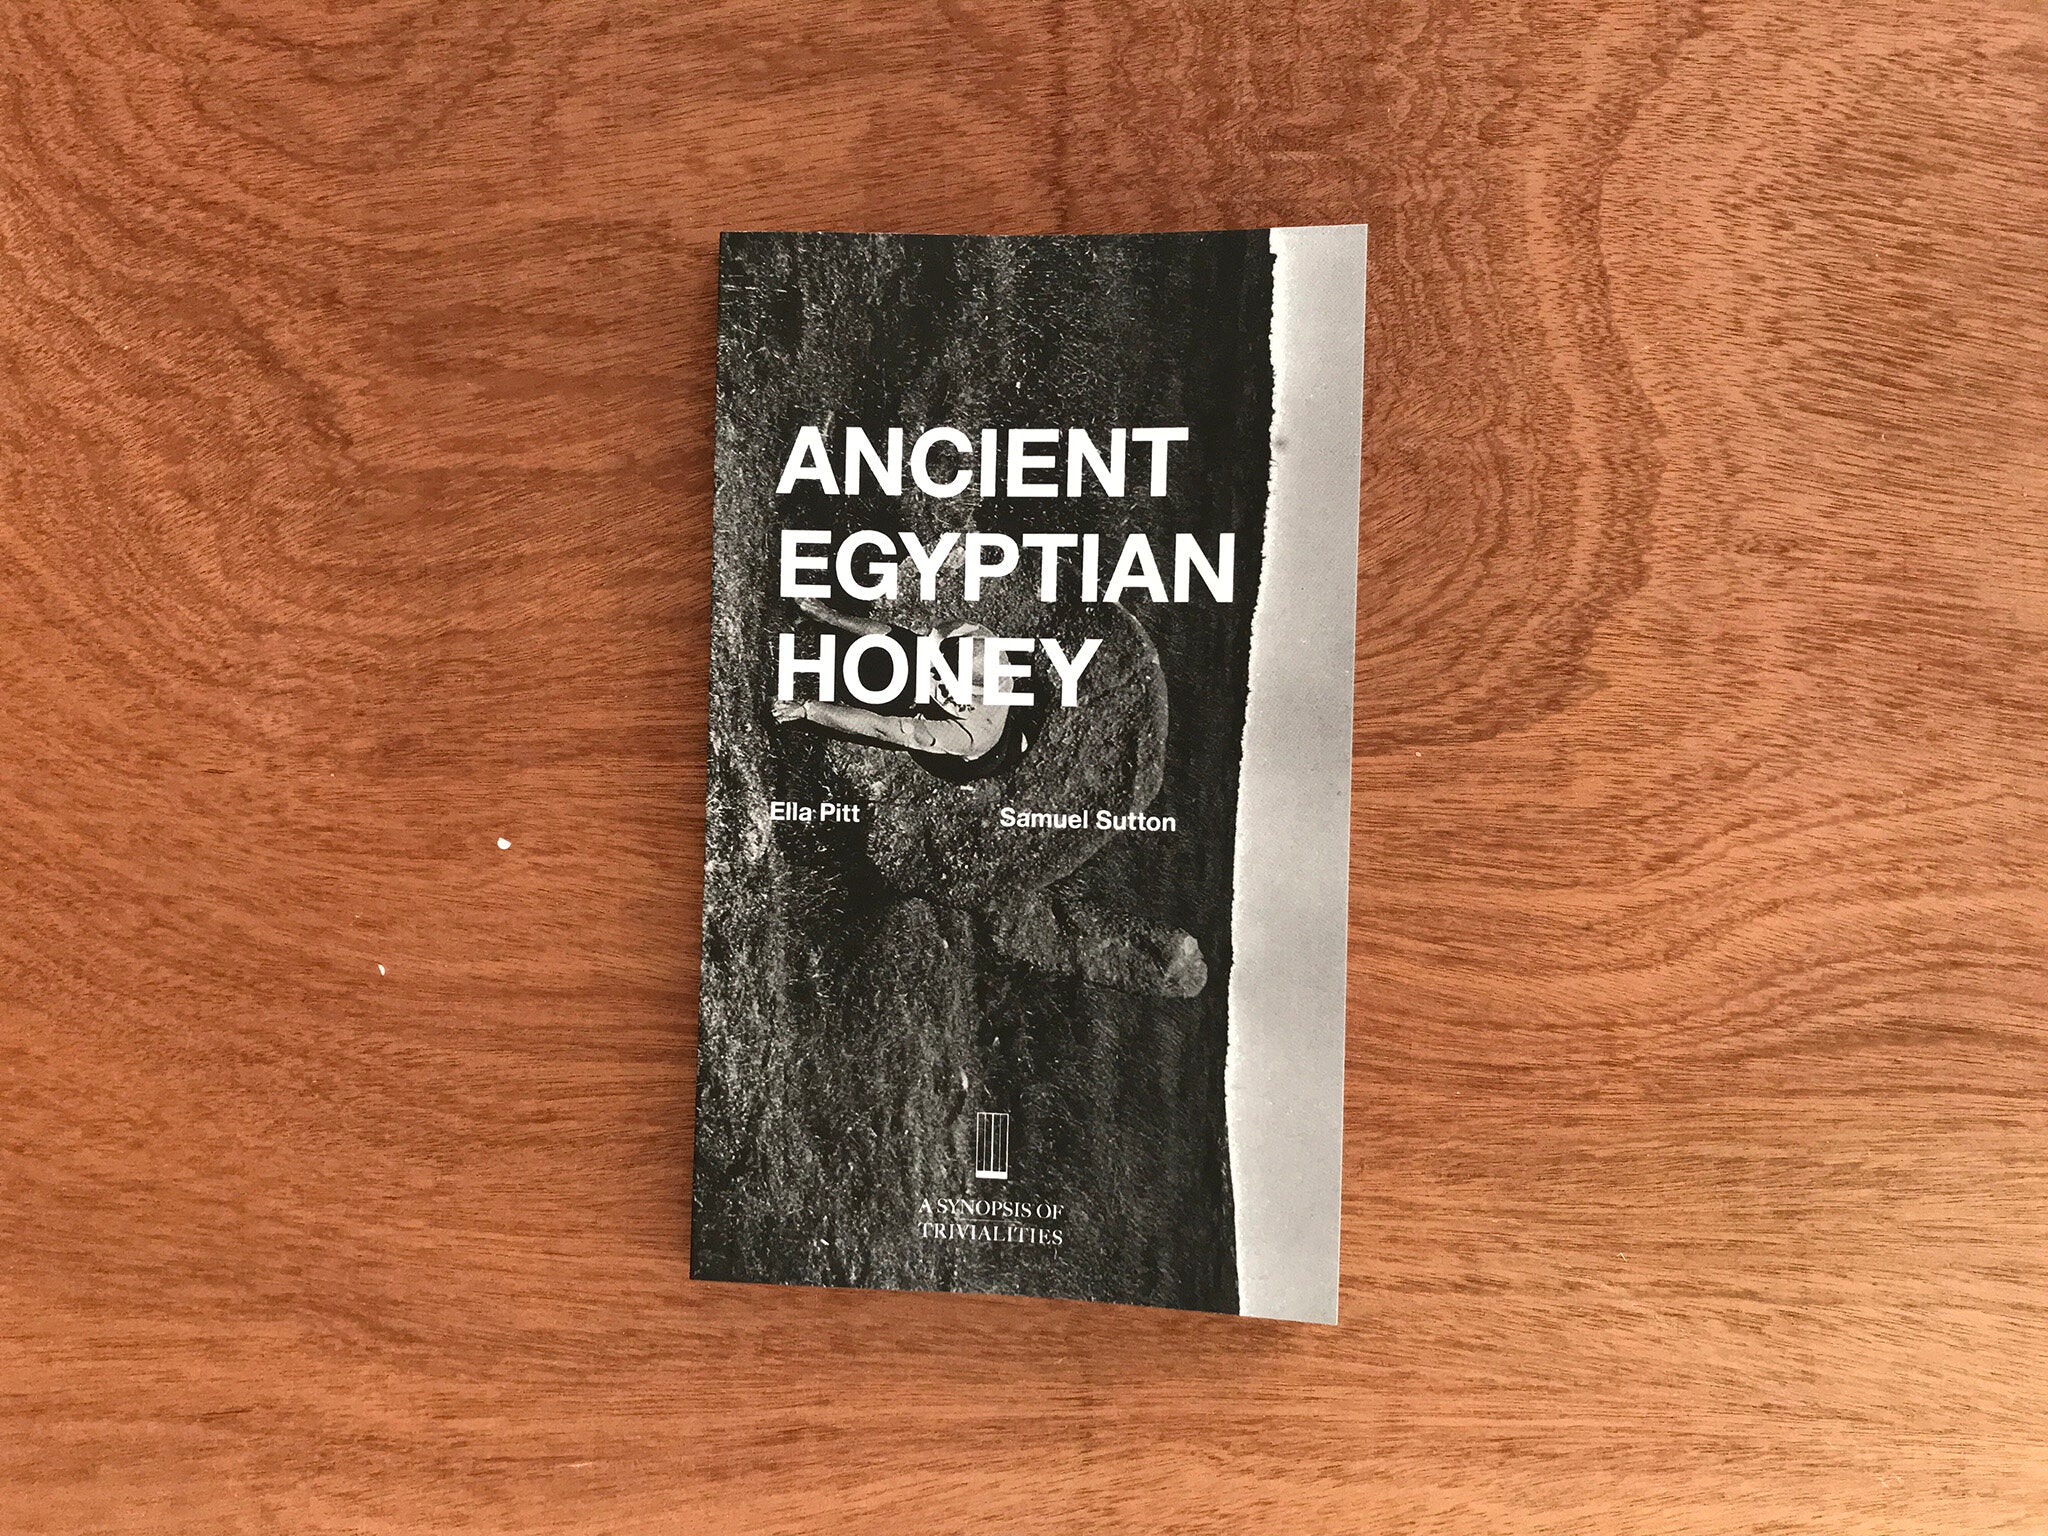 ANCIENT EGYPTIAN HONEY by Ella Pitt and Samuel Sutton